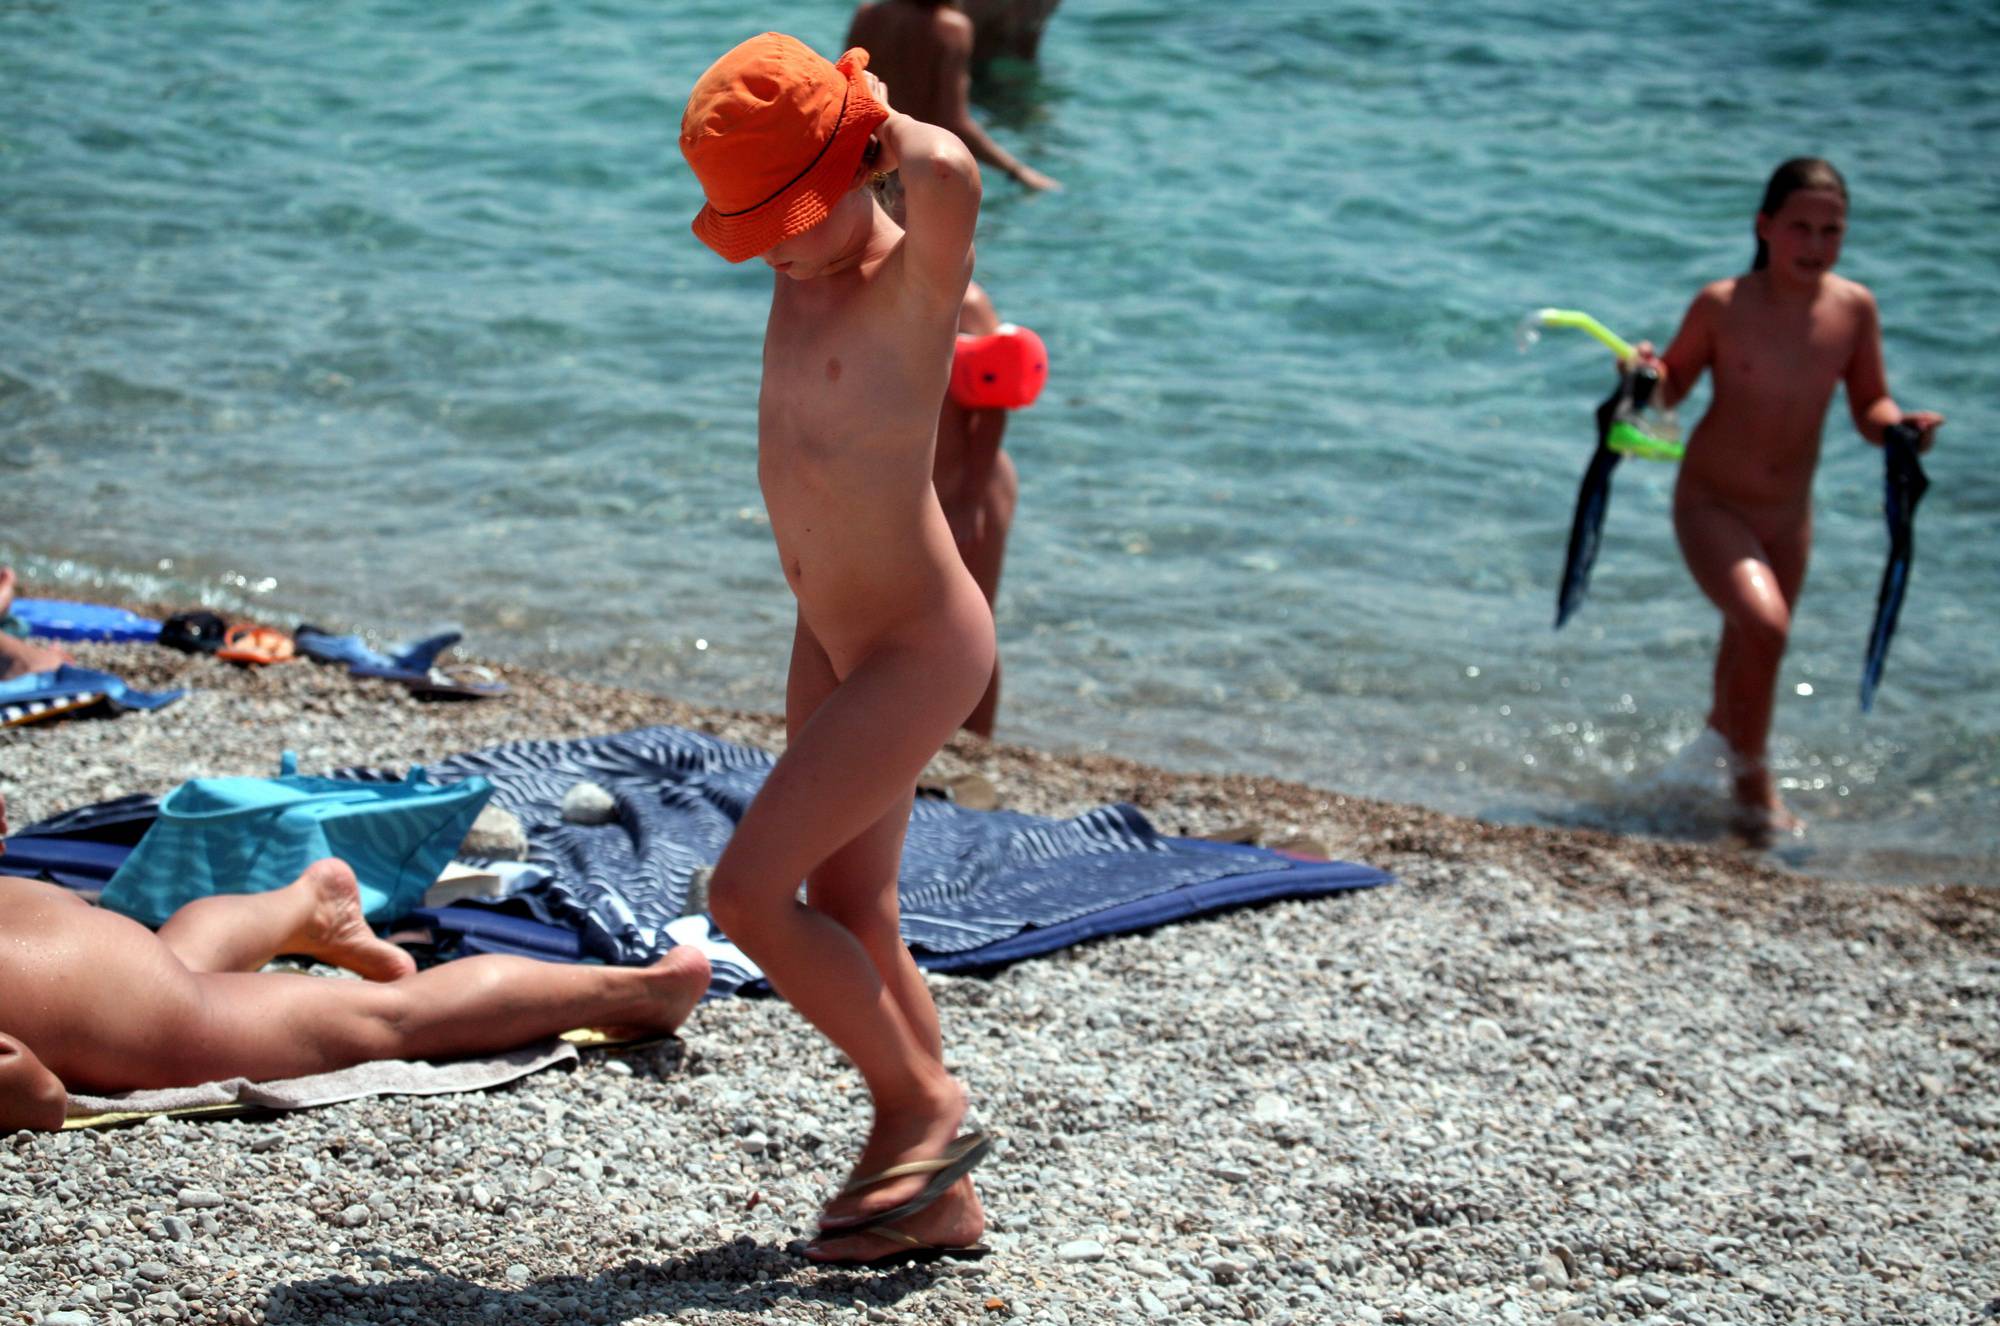 Nudist Girl Beach Walk-On - 3